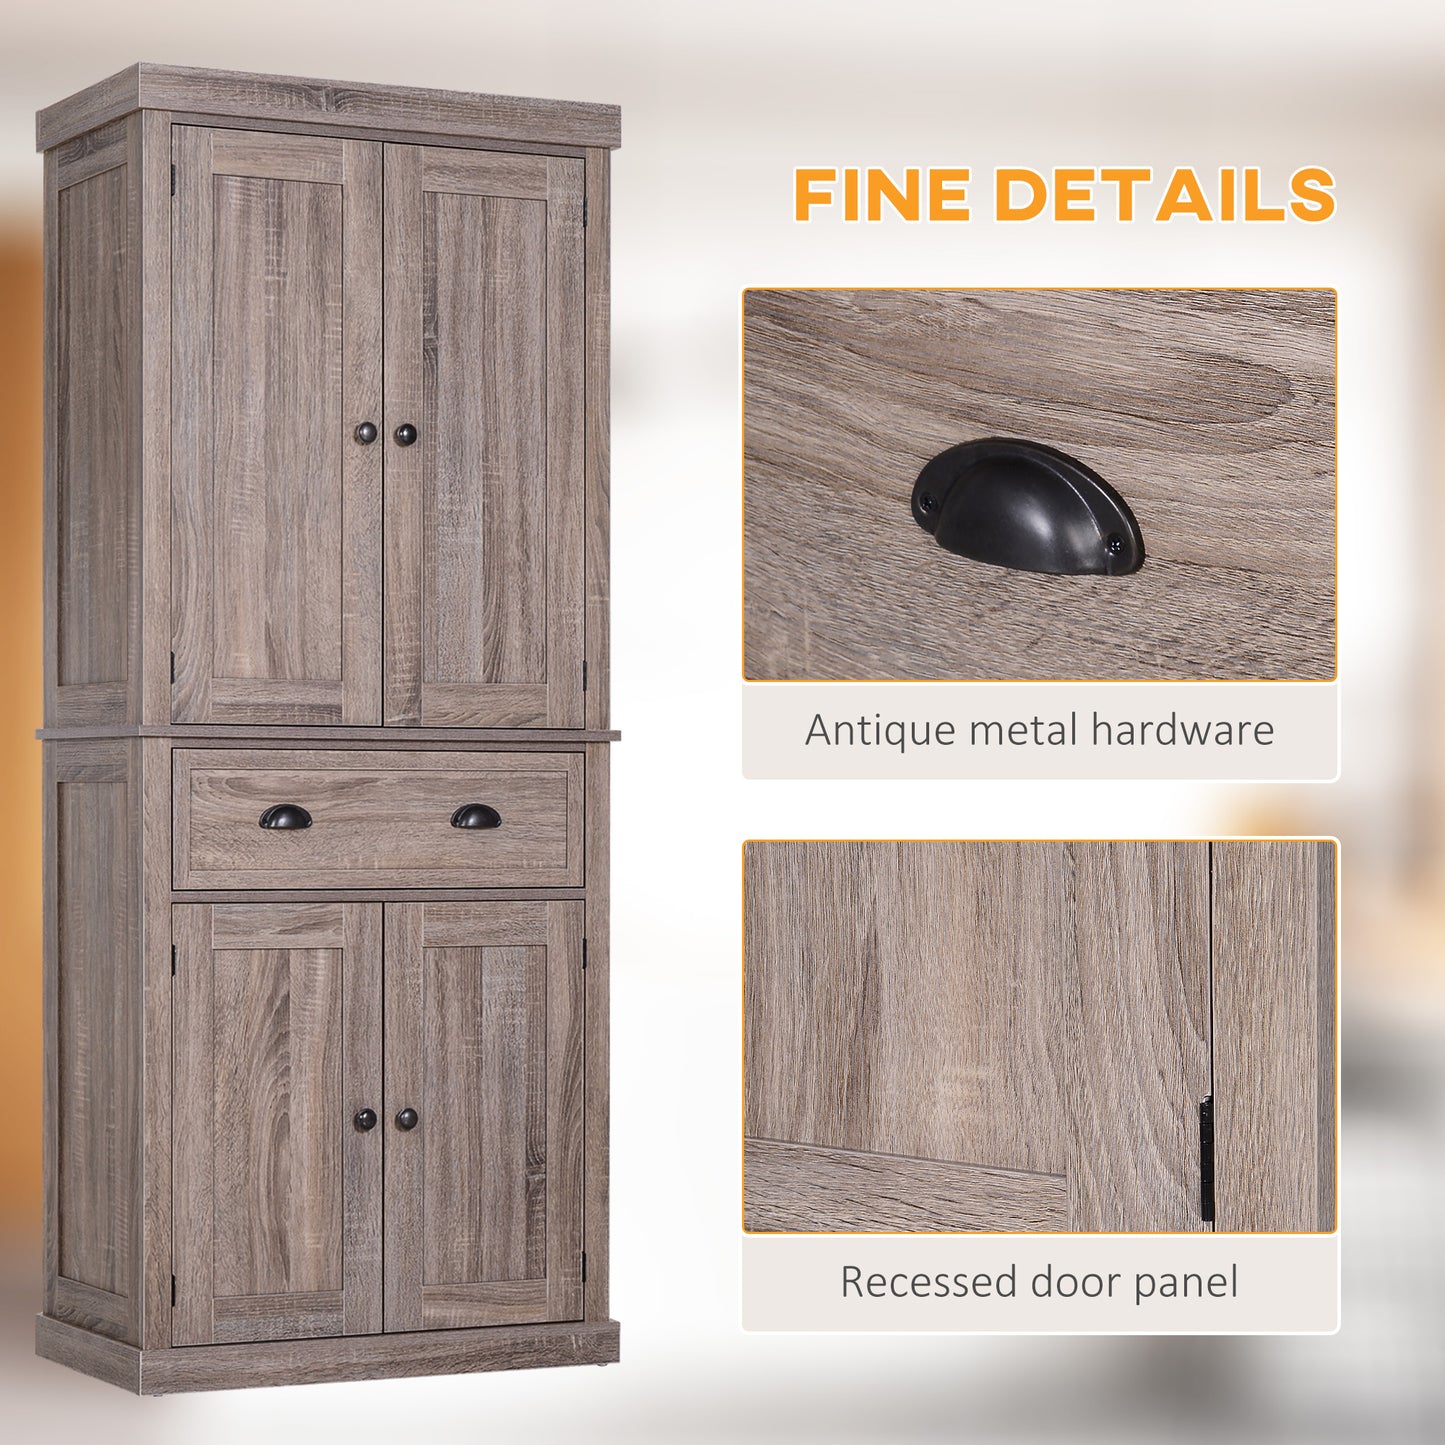 HOMCOM MDF Freestanding Kitchen Pantry Cabinet Wood Tone